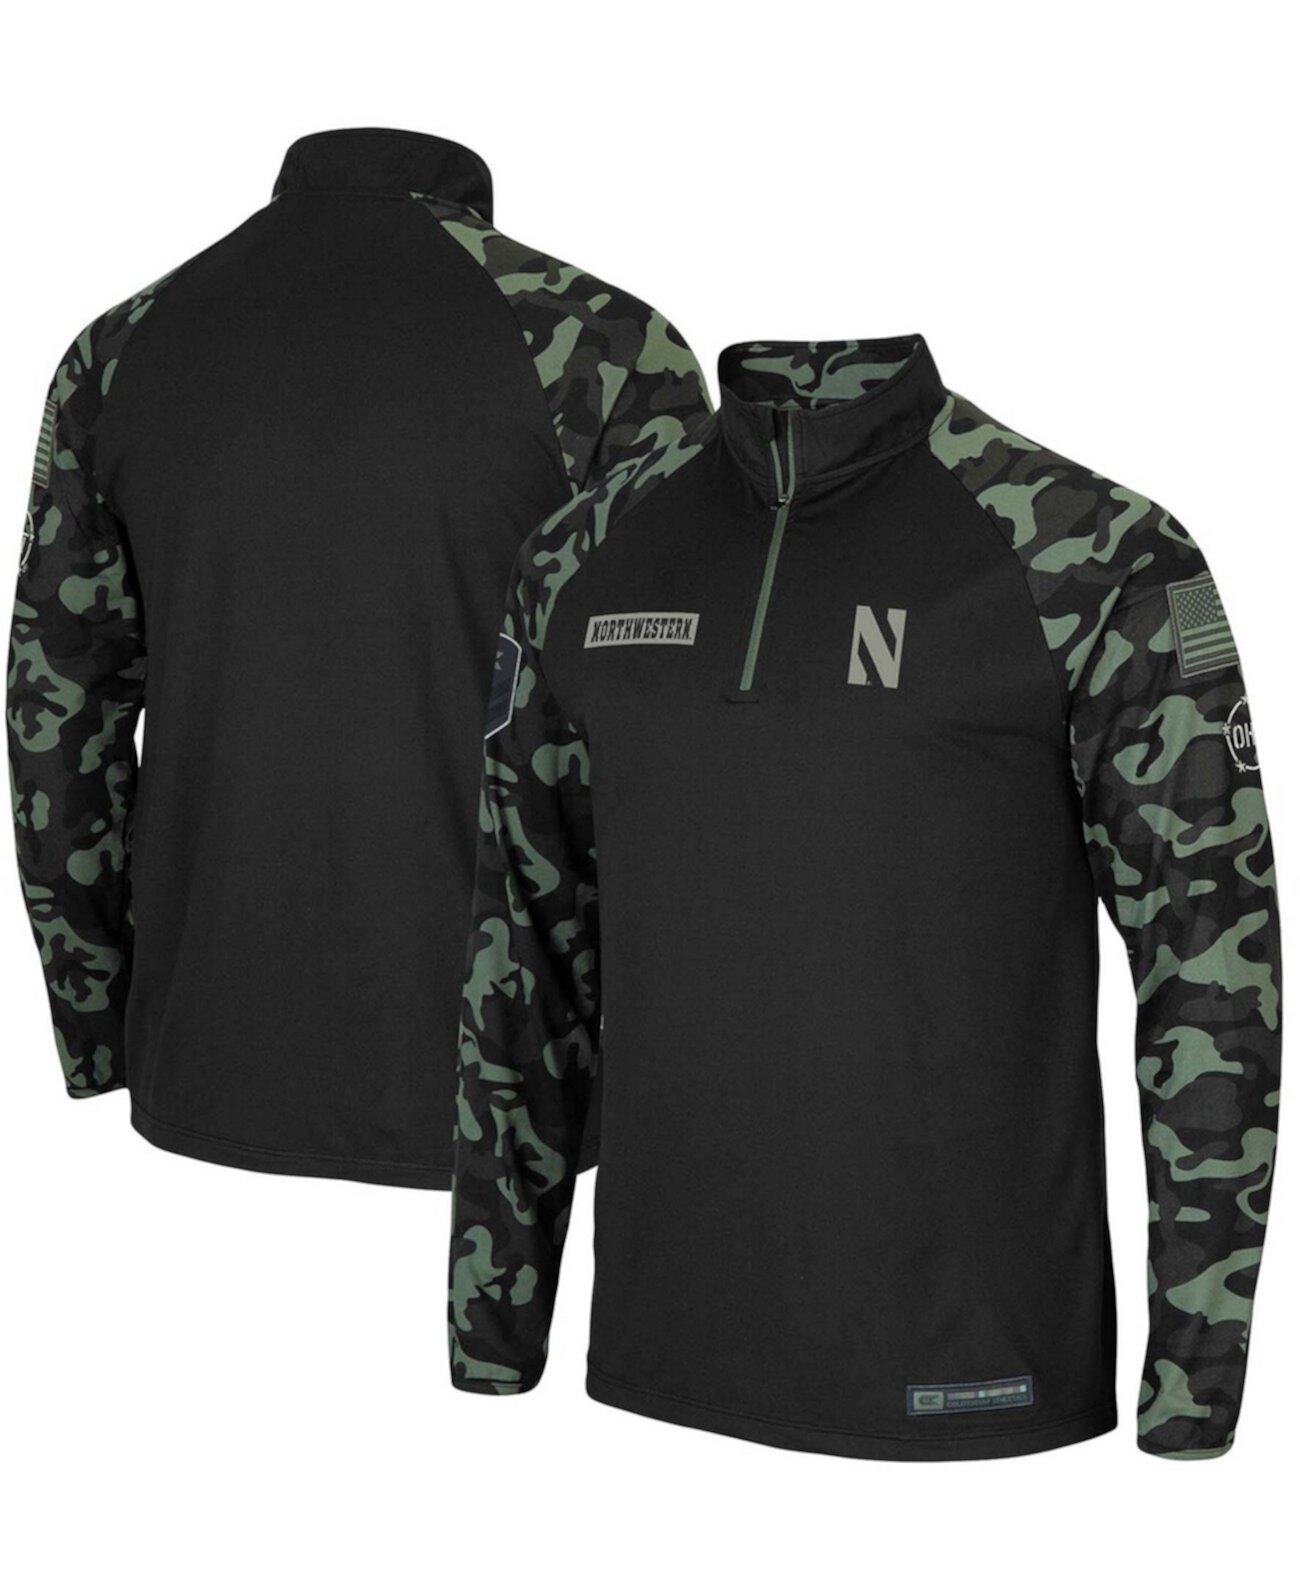 Мужская черная куртка Northwestern Wildcats OHT в стиле милитари с регланом Take Flight с застежкой-молнией и регланом Colosseum